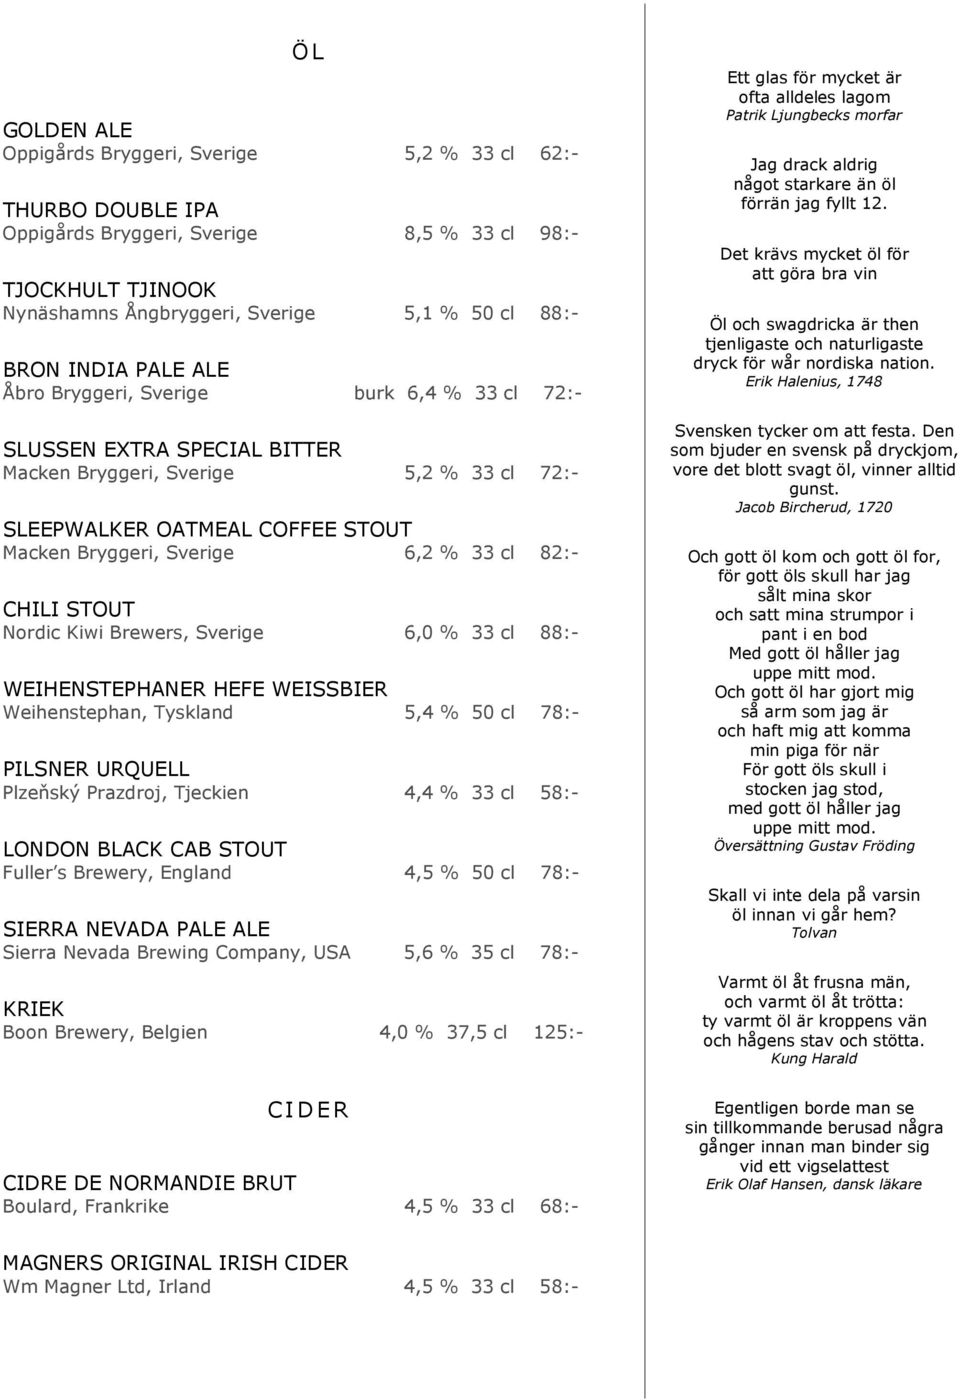 CHILI STOUT Nordic Kiwi Brewers, Sverige 6,0 % 33 cl 88:- WEIHENSTEPHANER HEFE WEISSBIER Weihenstephan, Tyskland 5,4 % 50 cl 78:- PILSNER URQUELL Plzeňský Prazdroj, Tjeckien 4,4 % 33 cl 58:- LONDON